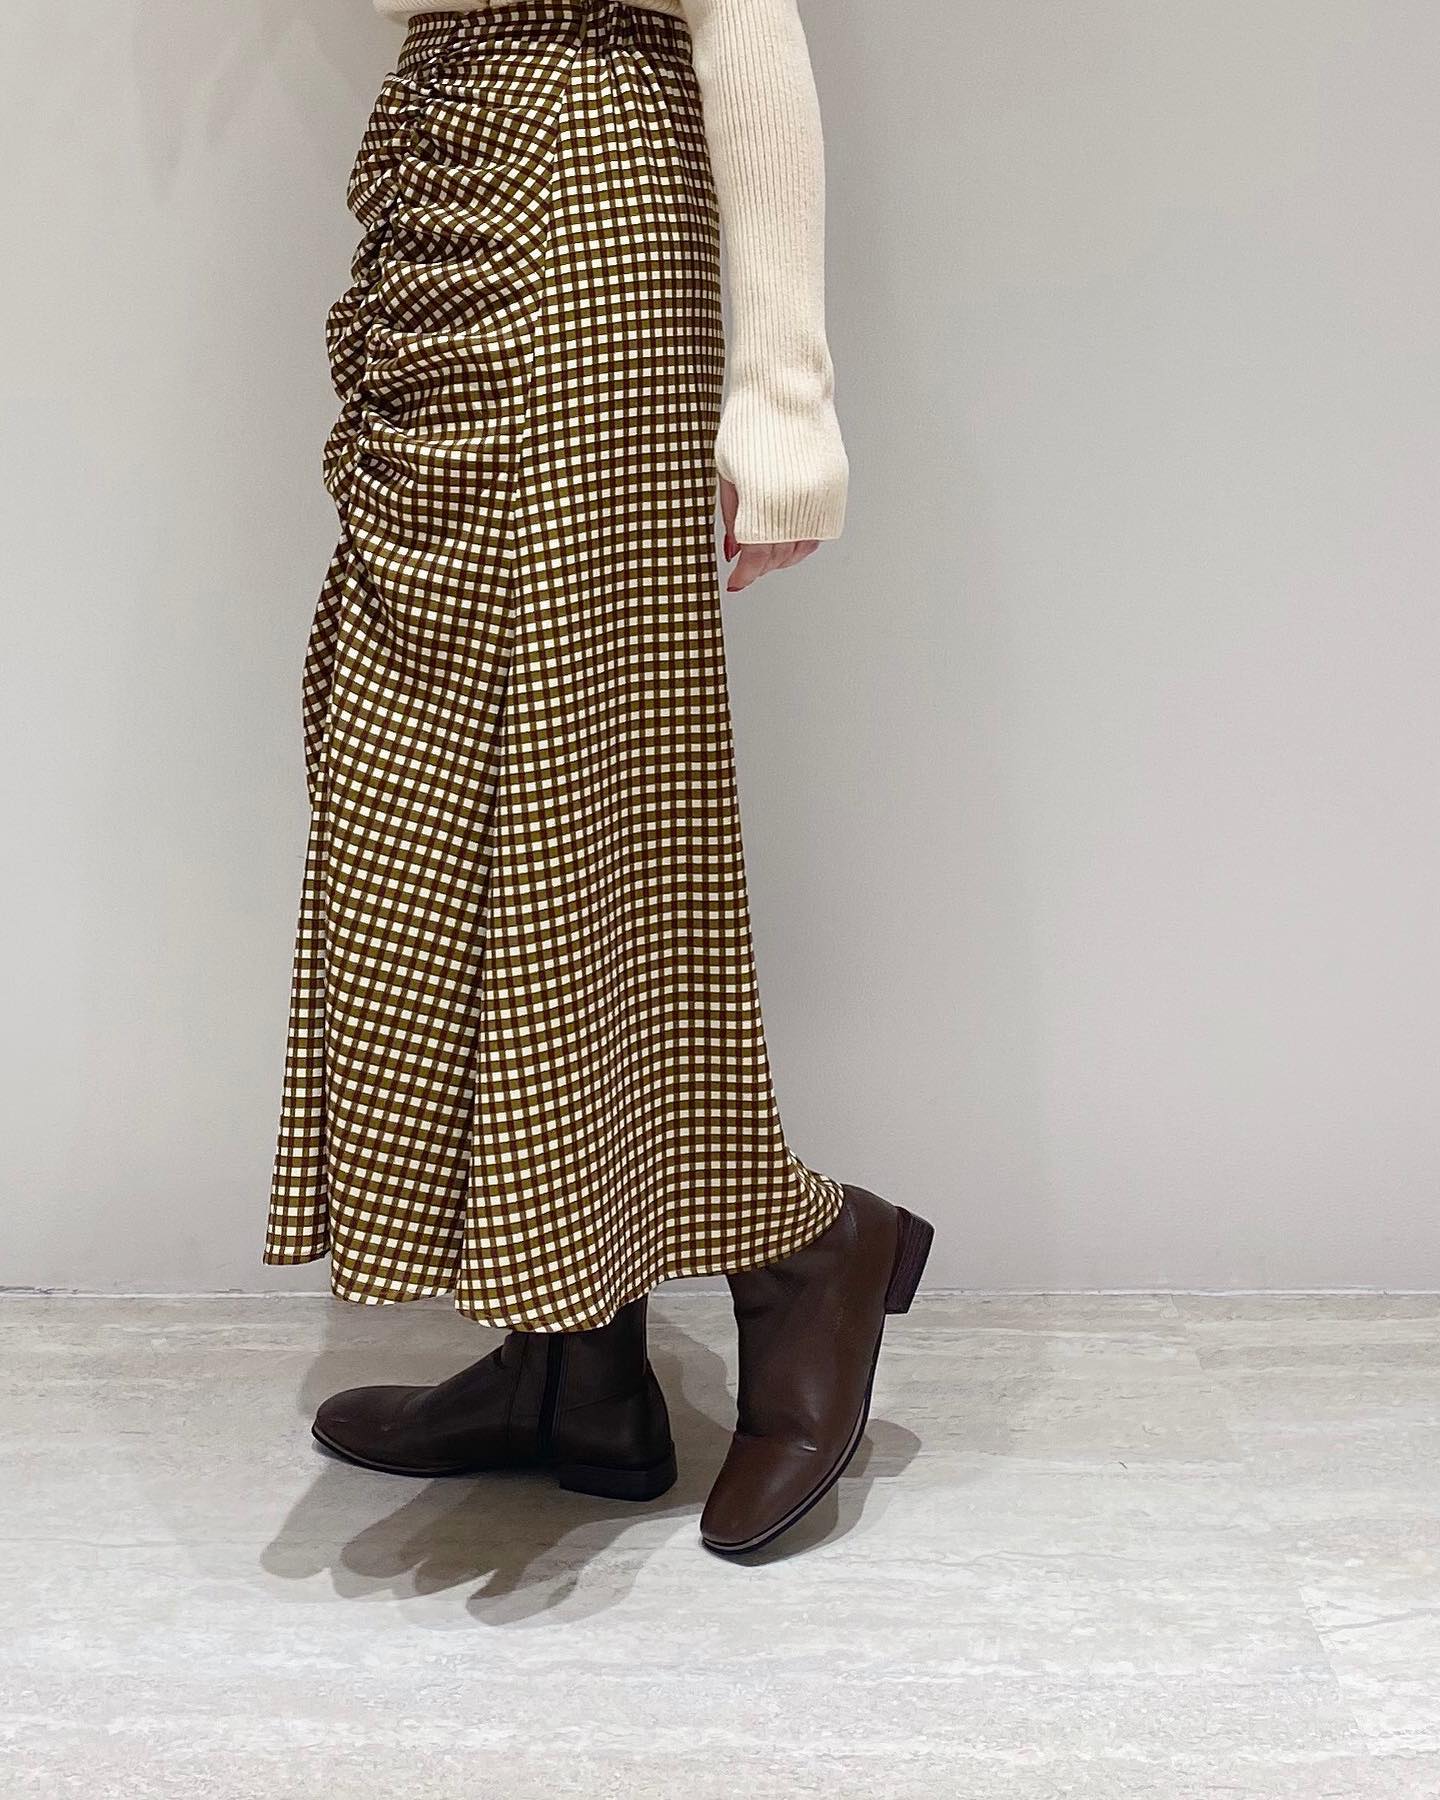 " newarrival "⁡︎Wシャーリングスカート ¥4,290⁡︎ハイネックリブニット ¥2,530⁡⁡取り扱い店舗、オンラインにて現在販売中です。ぜひこの機会にご覧下さい♡⁡⁡⁡⁡⁡⁡⁡⁡#urmelty #ユアメルティ #スカート #ロングスカート #シャーリングスカート #柄スカート #ギンガムスカート #スカートコーデ #ロングスカートコーデ  #シャーリングスカートコーデ #デザインスカート #デザインスカートコーデ #ハイネックニット #ニットコーデ #ギンガムコーデ #柄スカートコーデ #ガーリーコーデ #ガーリーアイテム #春アイテム #春コーデ #韓国っぽ #韓国っぽコーデ #韓国ファッション #韓国風 #コリヨジャ #オトジョ #大人女子 #オトジョコーデ